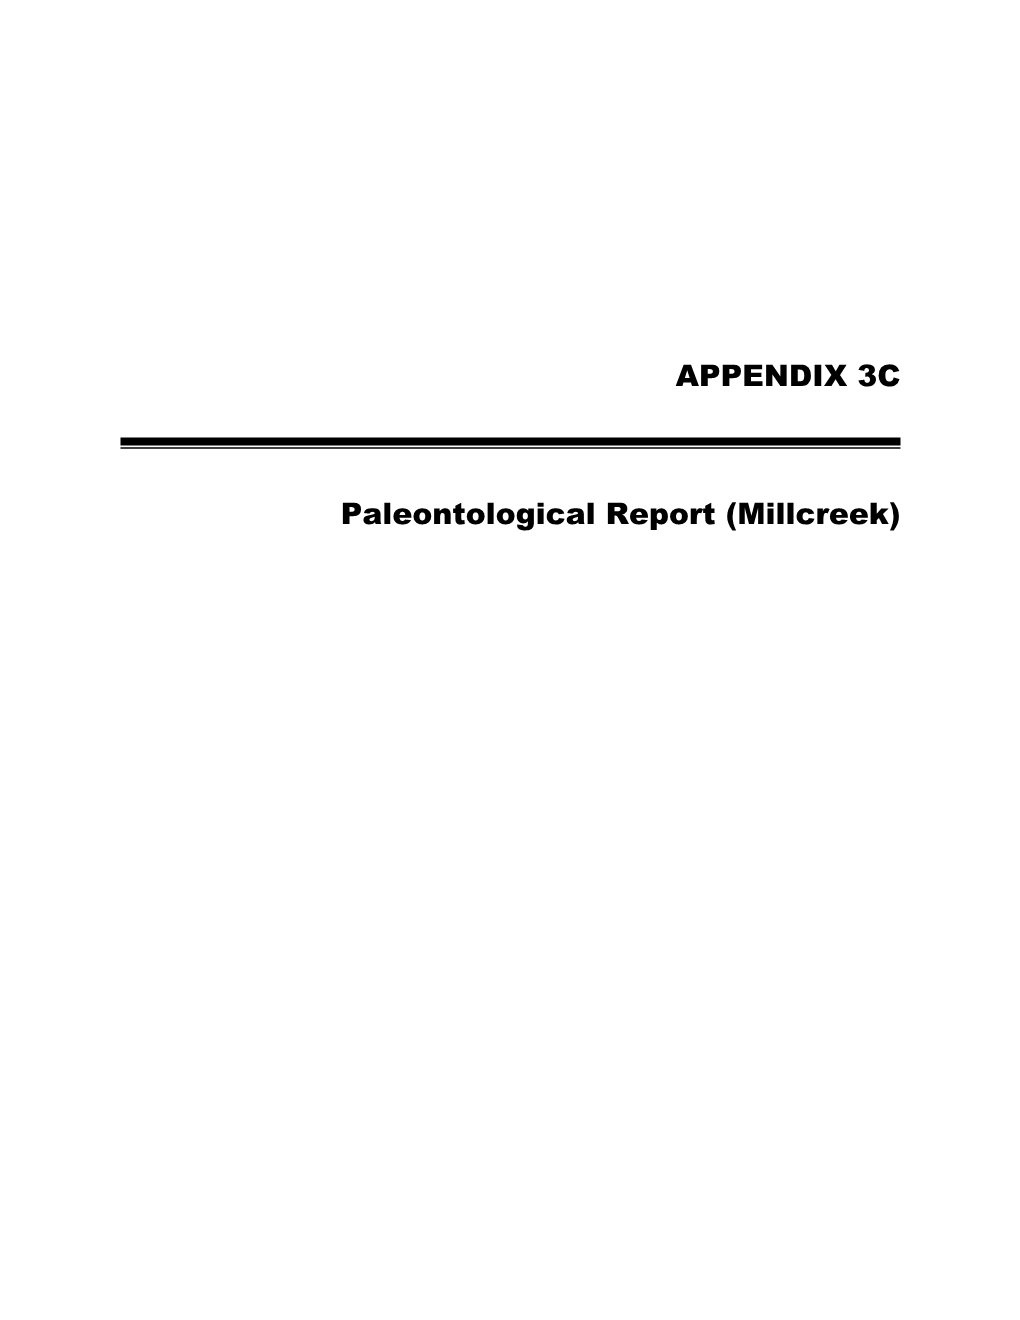 Paleontological Resources Assessment Report